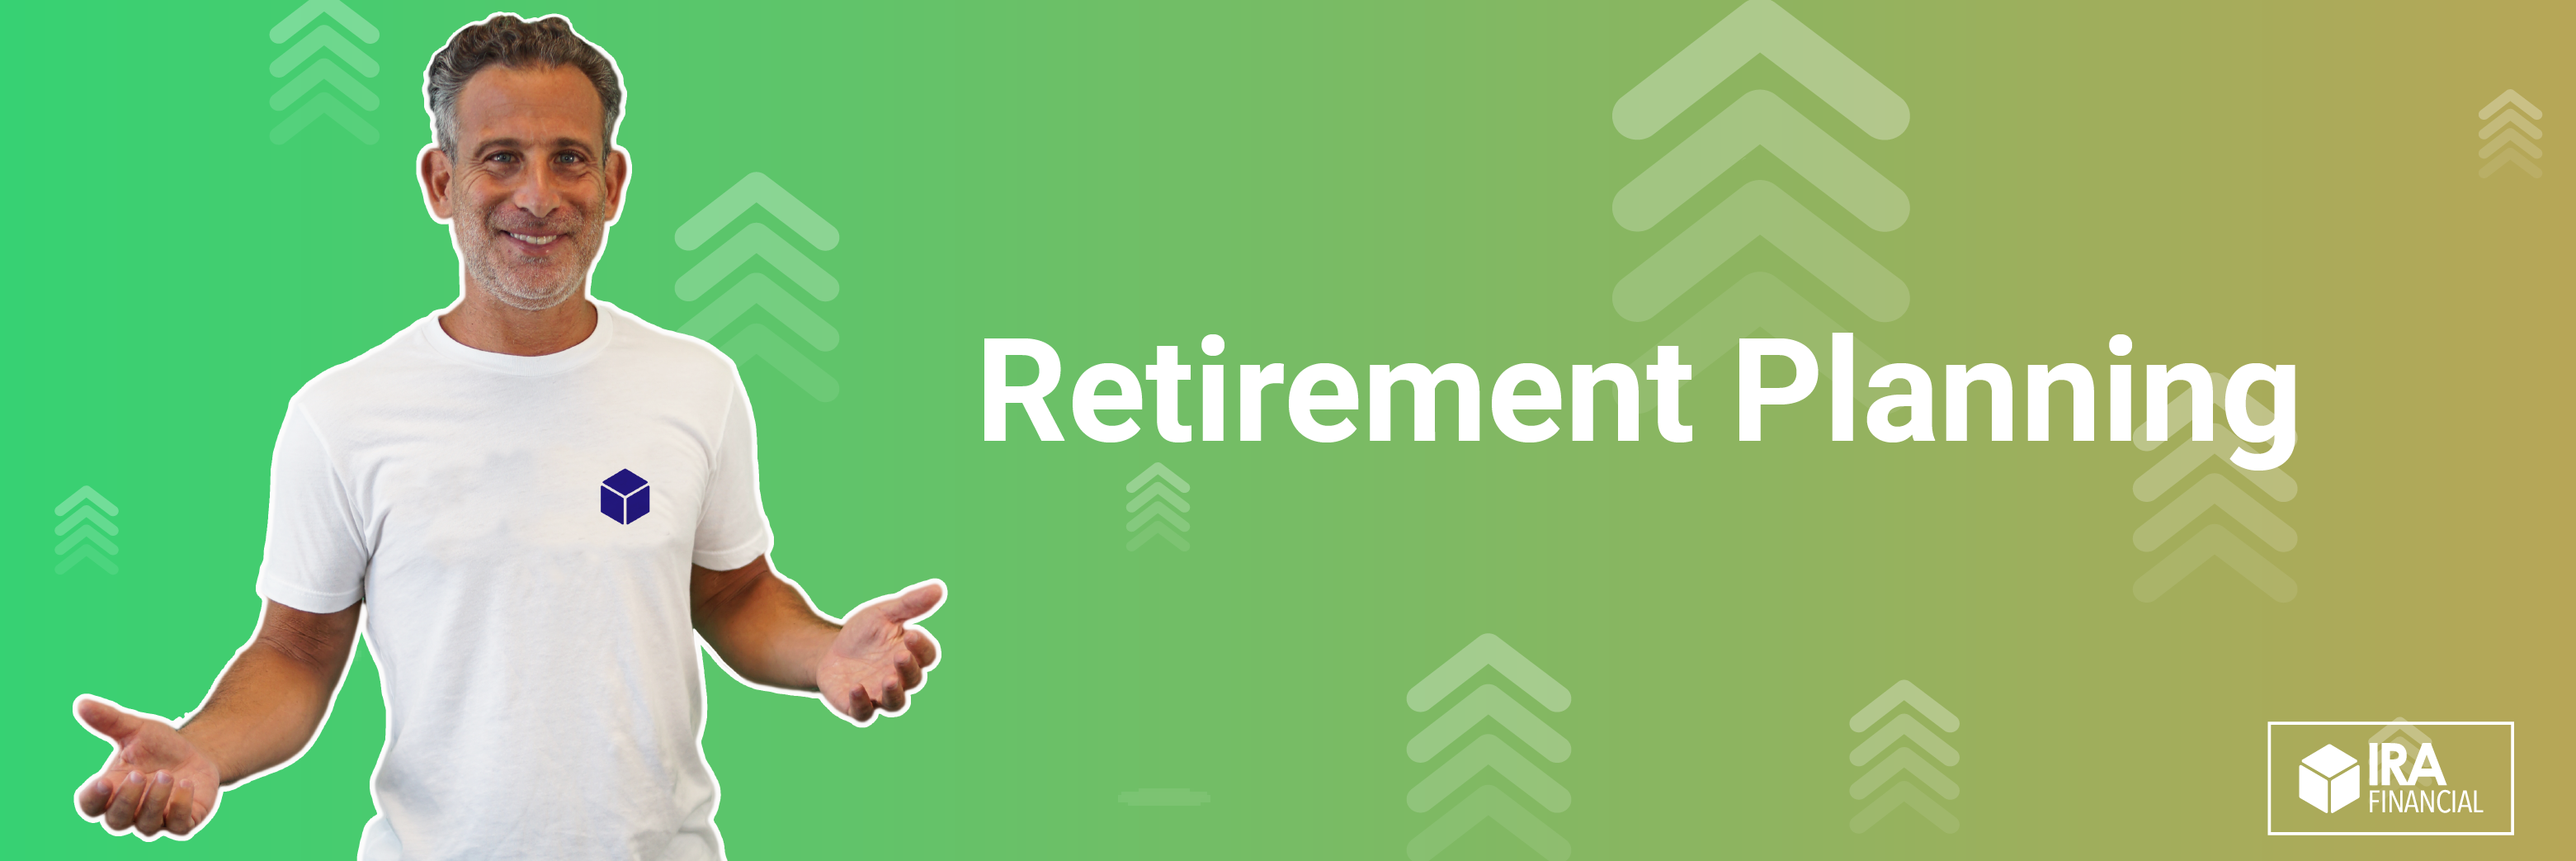 Retirement Planning Videos